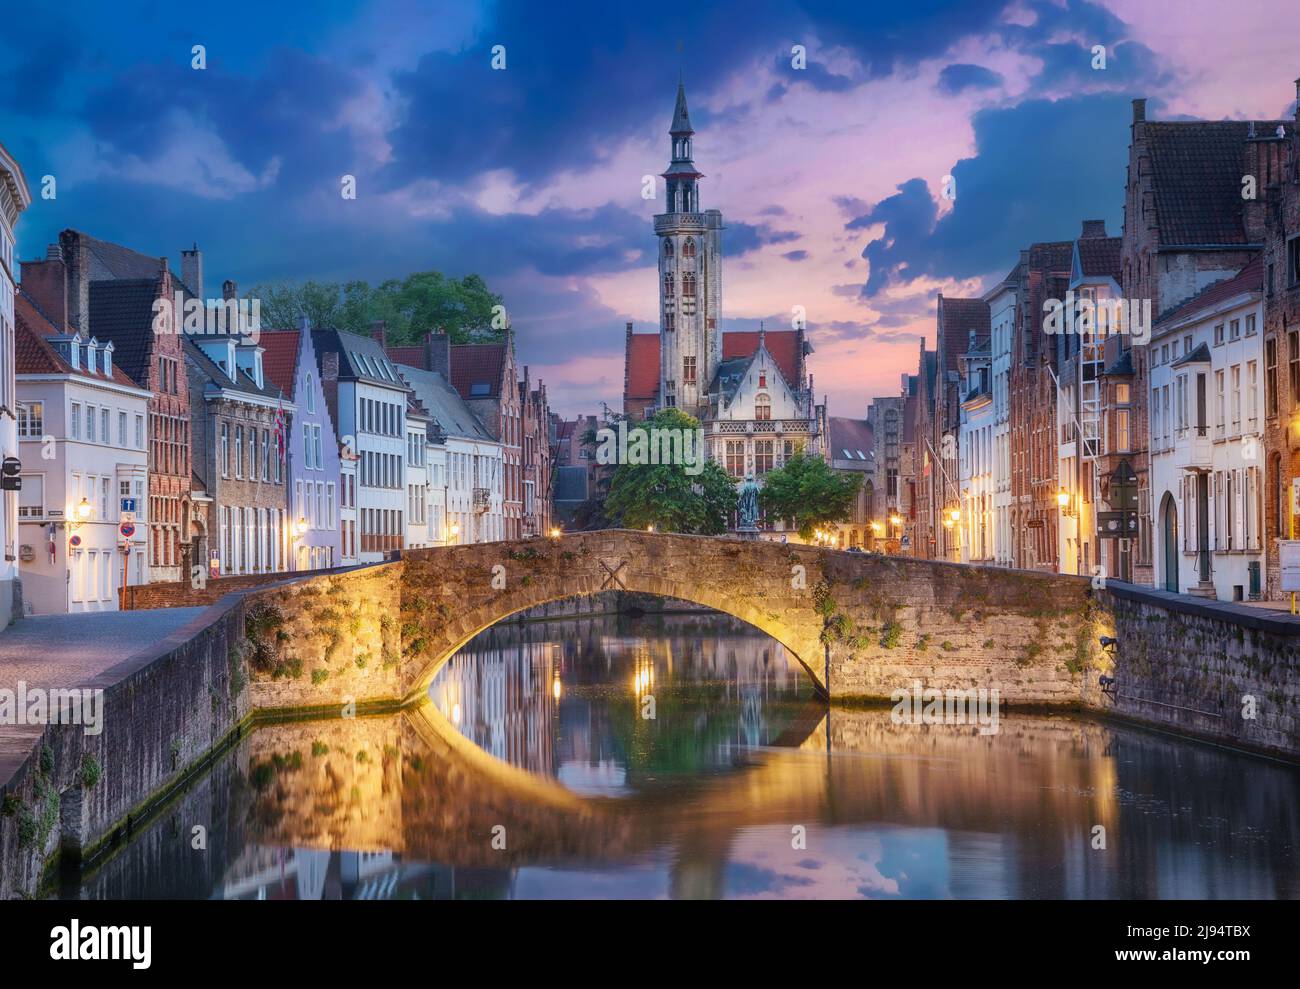 Brujas o Brujas, Bélgica. Vista del canal Spiegelrei al atardecer (imagen HDR) Foto de stock